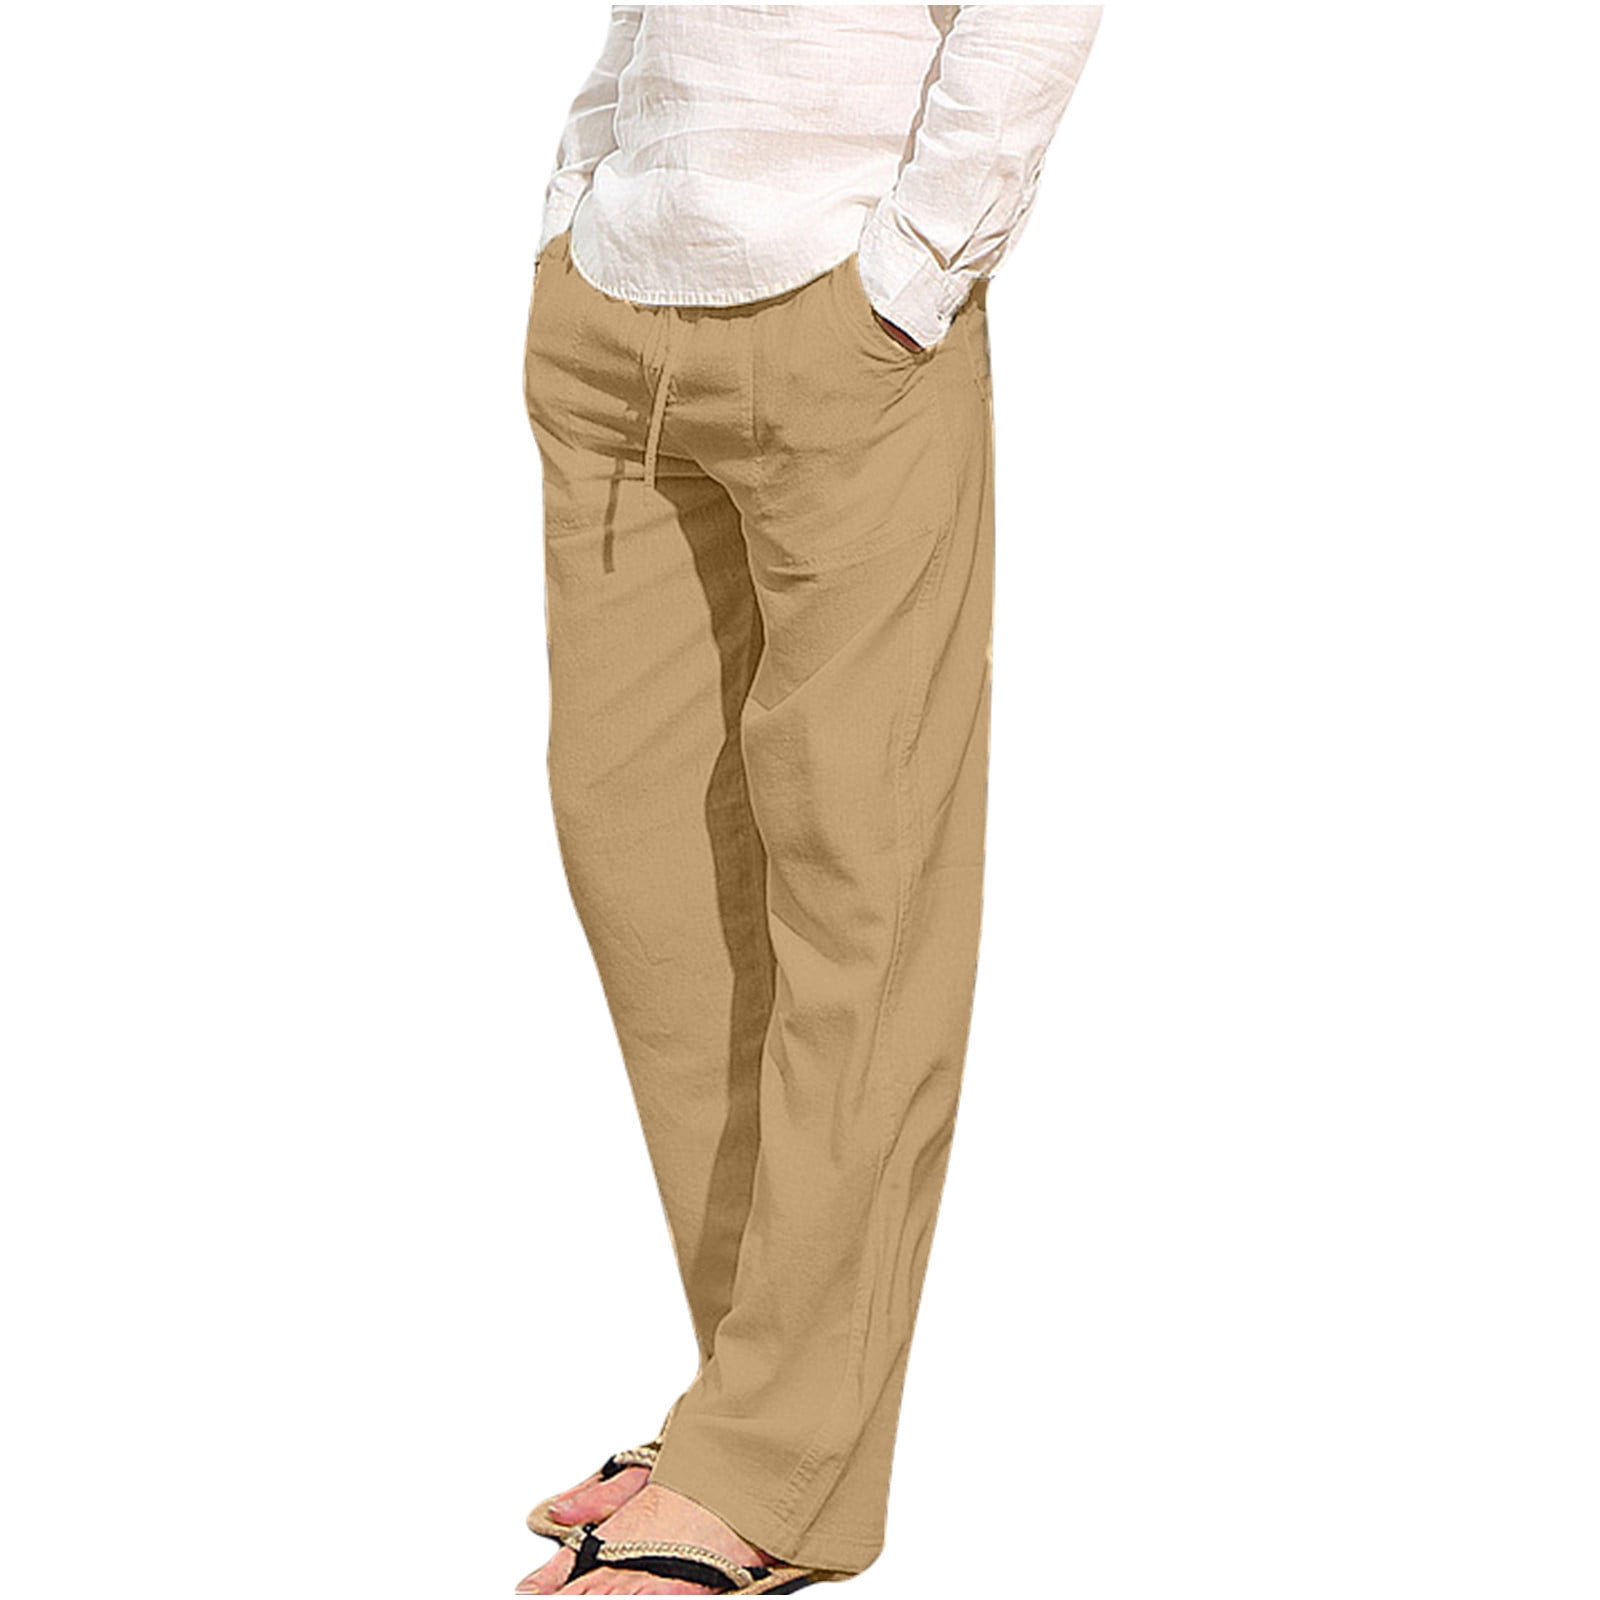 KIHOUT Men And Women Comfortable Printed High Waist Leisure Pants  Sweatpants Pants 